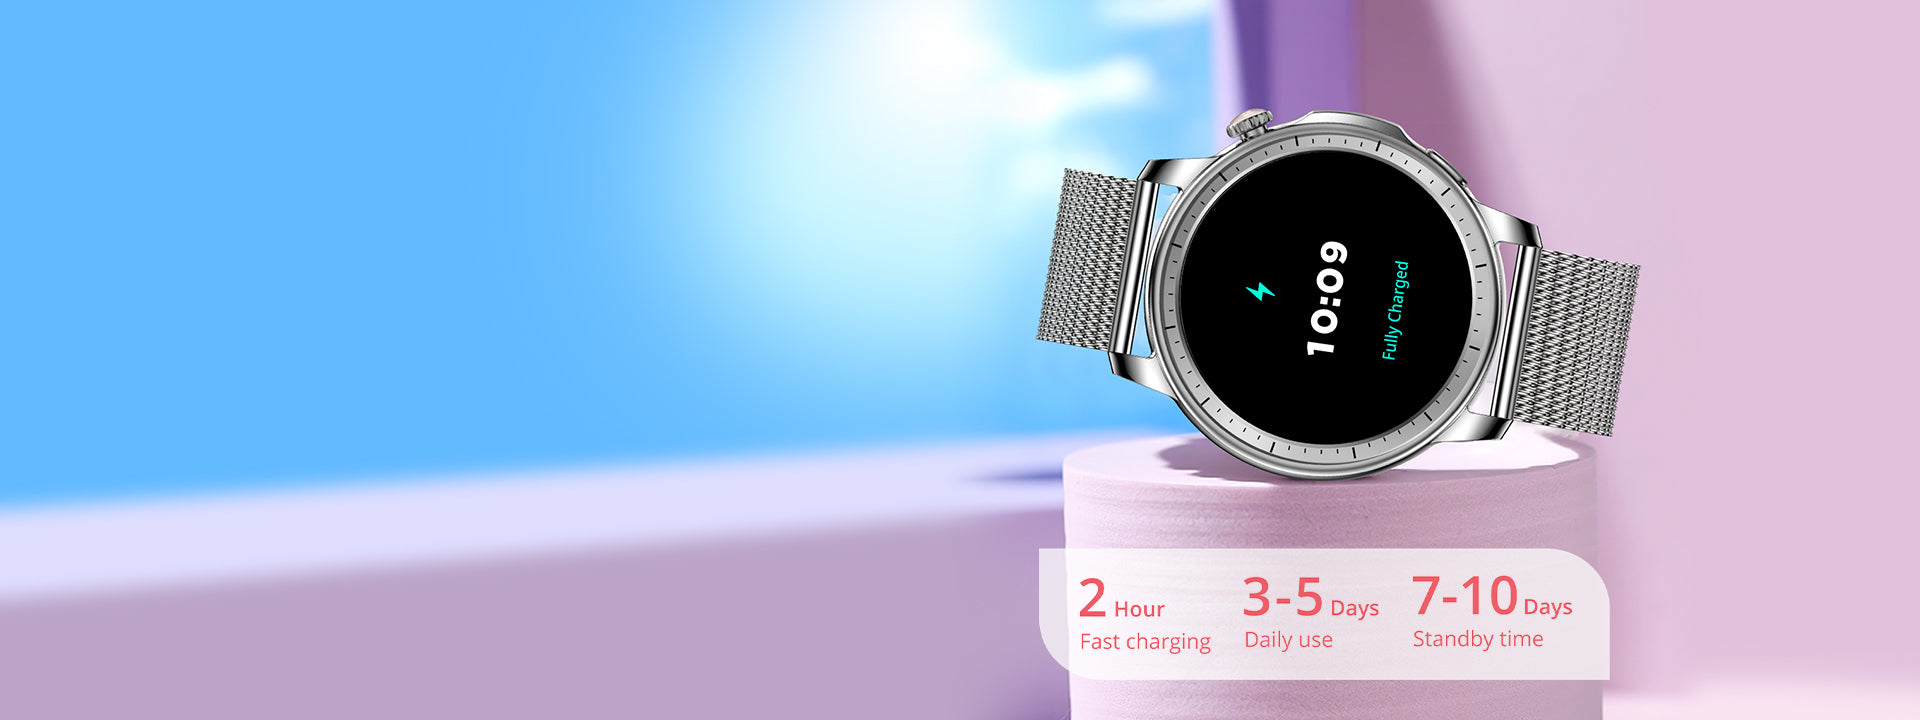 Smart watch COLMI V65 battery life (17)